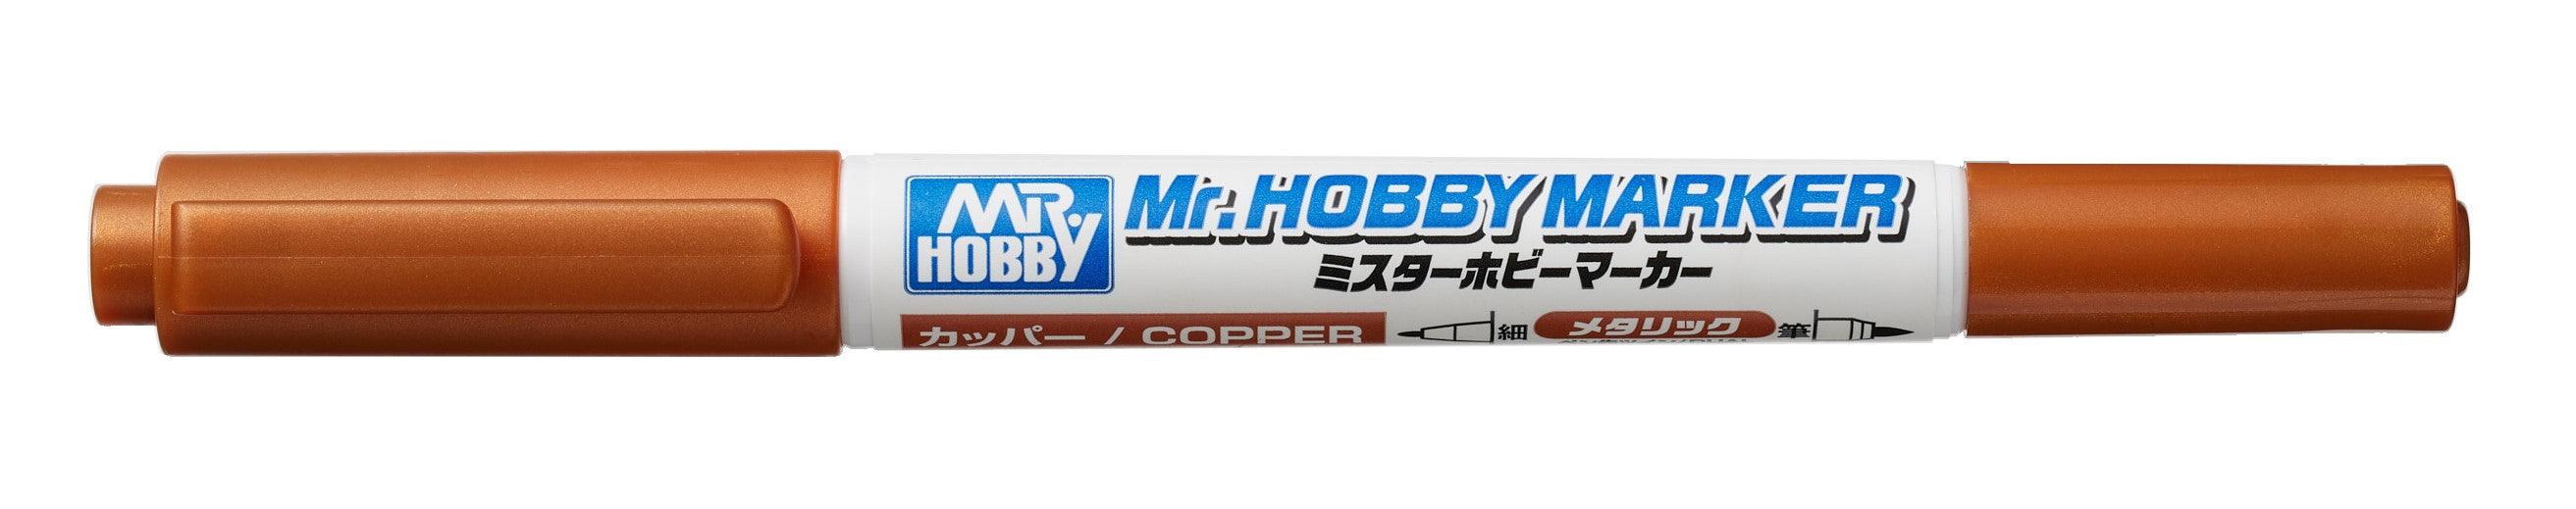 GSI Creos Mr.HOBBY MARKER: CM03 COPPER - SaQra Mart Hobby